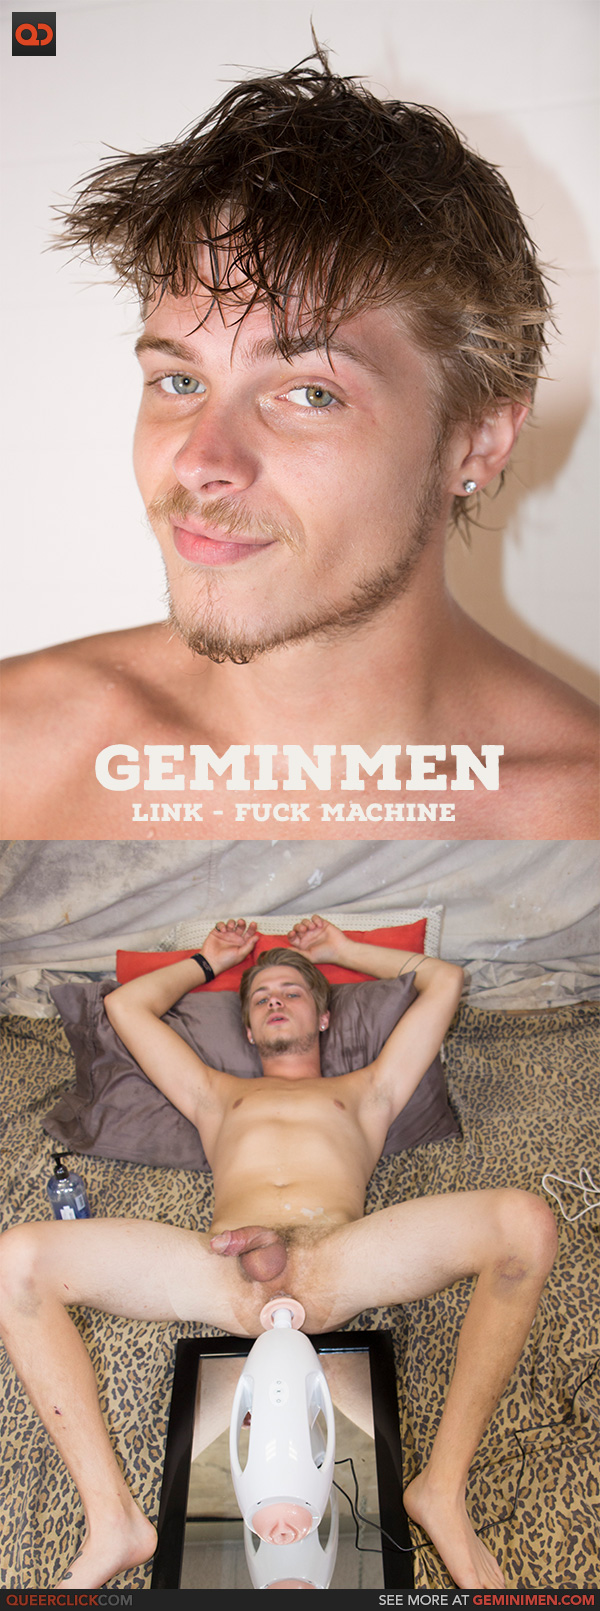 Gemini Men Link - Fuck Machine picture